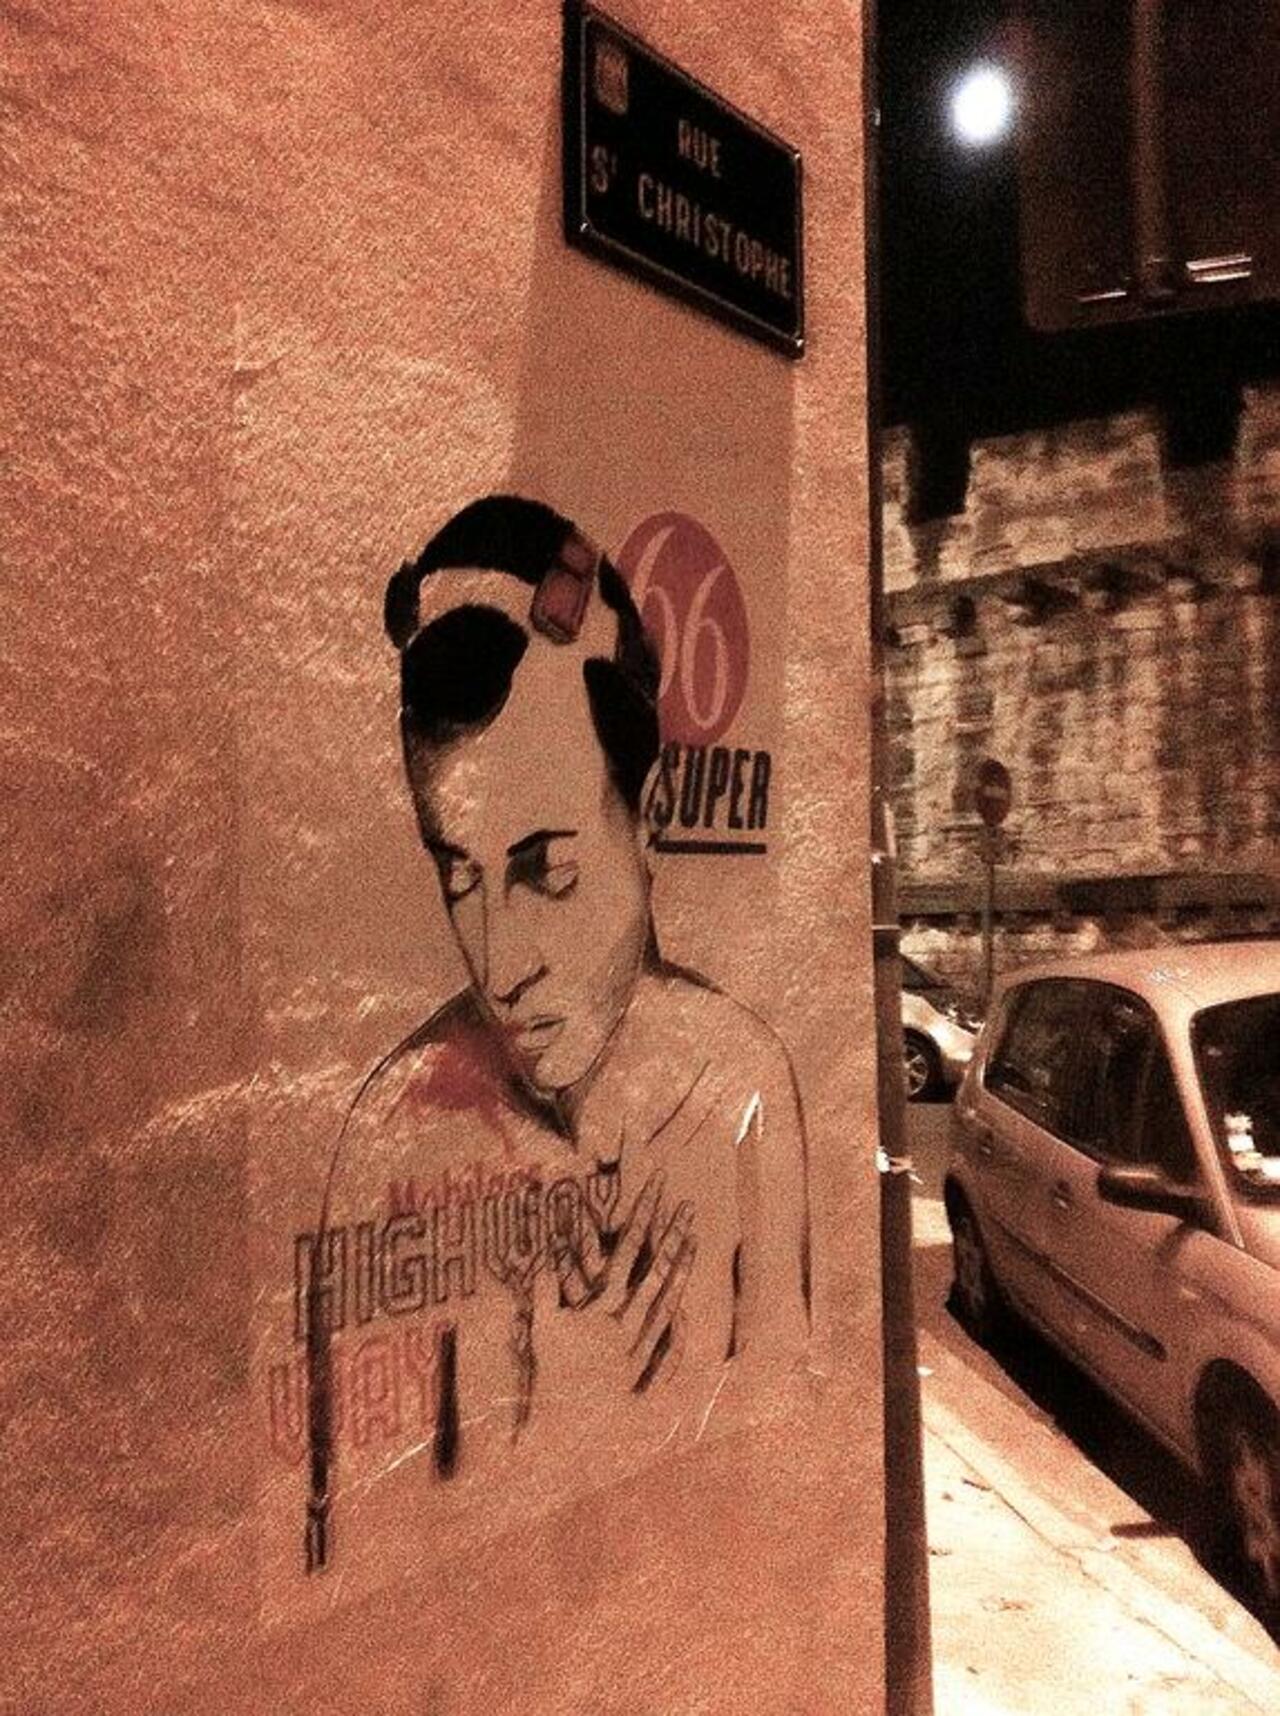 Street Art by STF moscato in #Avignon http://www.urbacolors.com #art #mural #graffiti #streetart http://t.co/y9ZSuhipBb